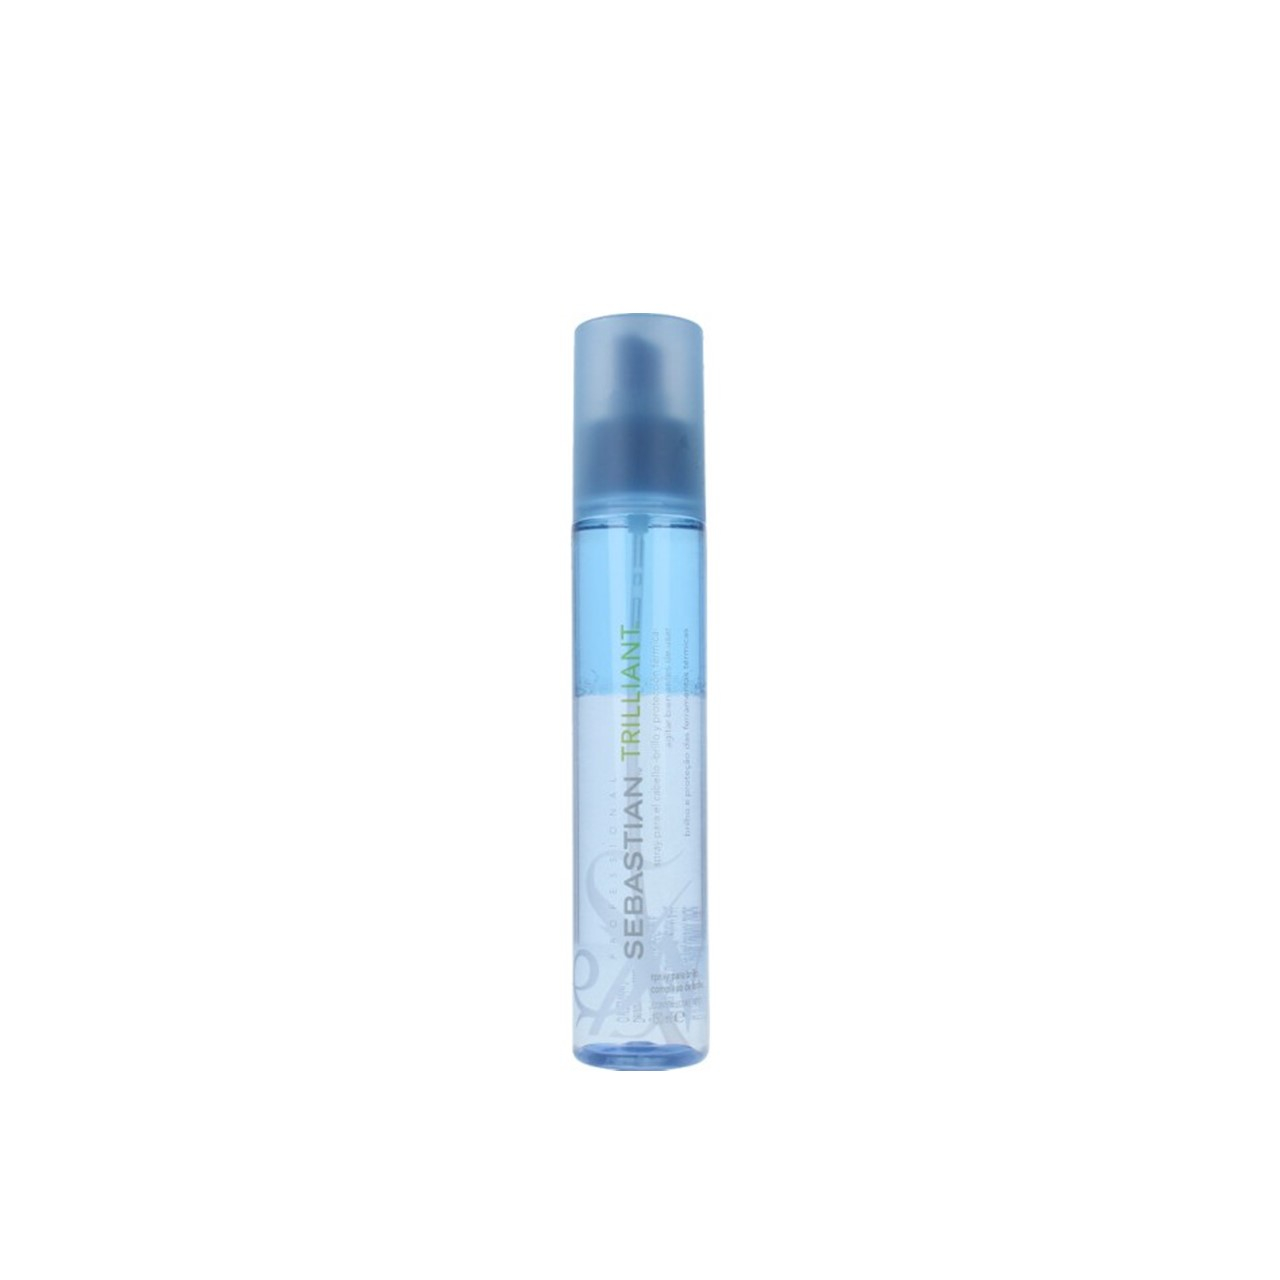 Sebastian Professional Trilliant Shine & Heat Protection Spray 150ml (5.07fl oz)